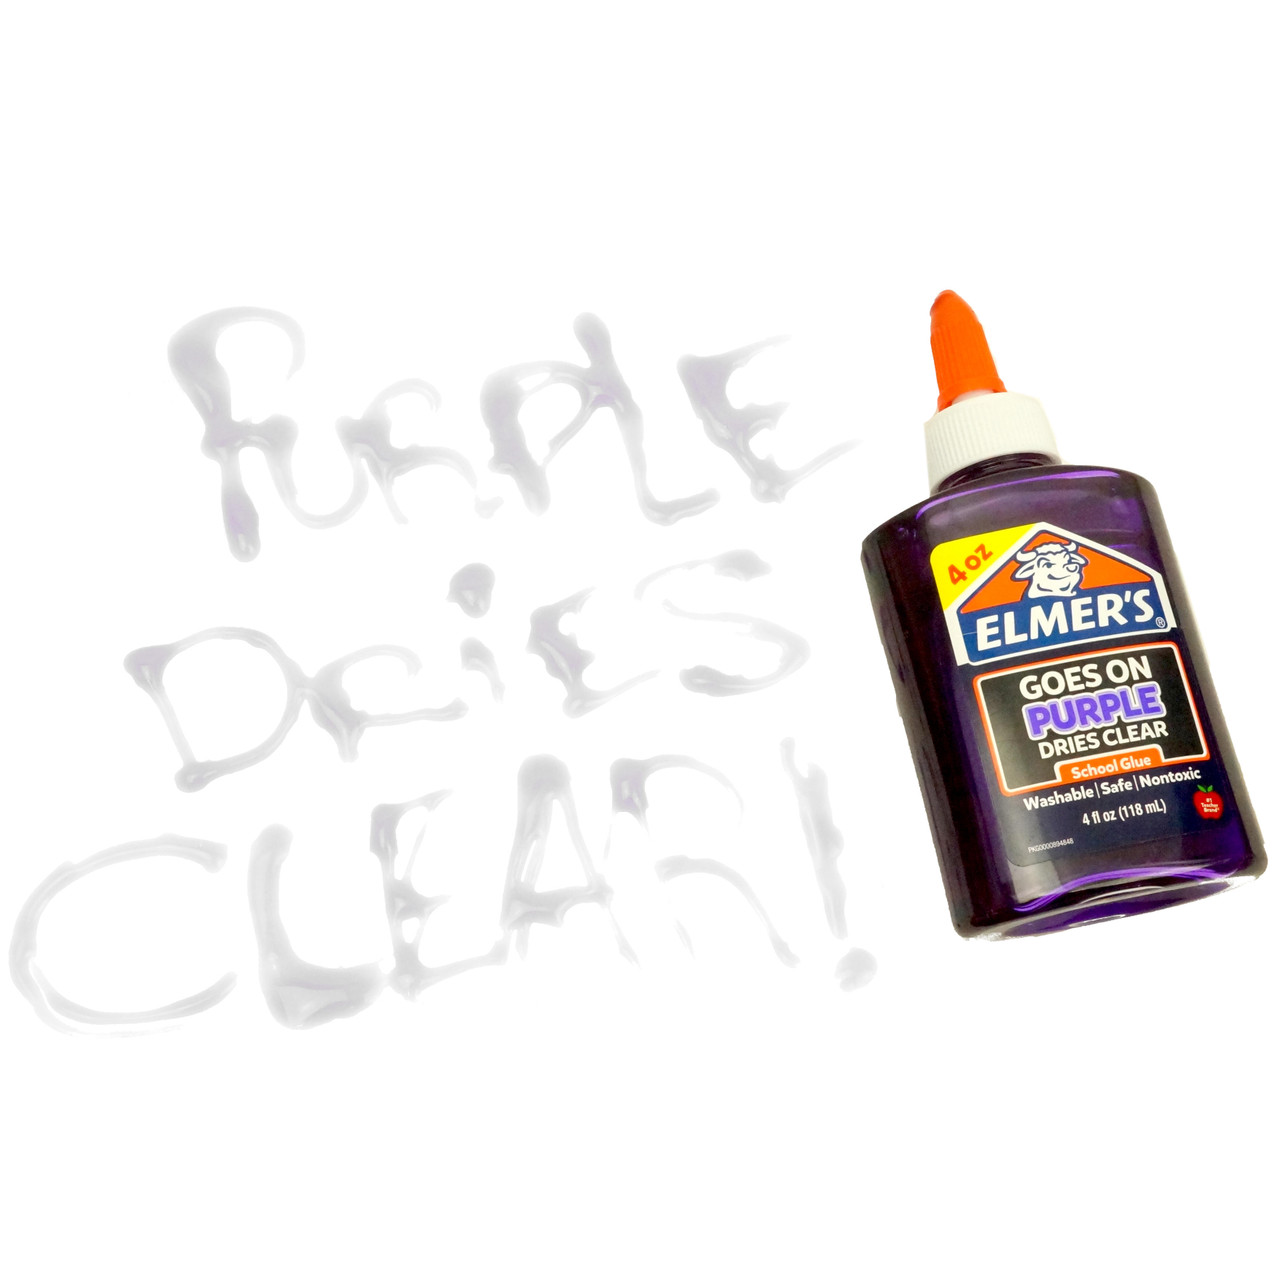 Elmer's - Clear glue, school glue, craft glue! We have it all